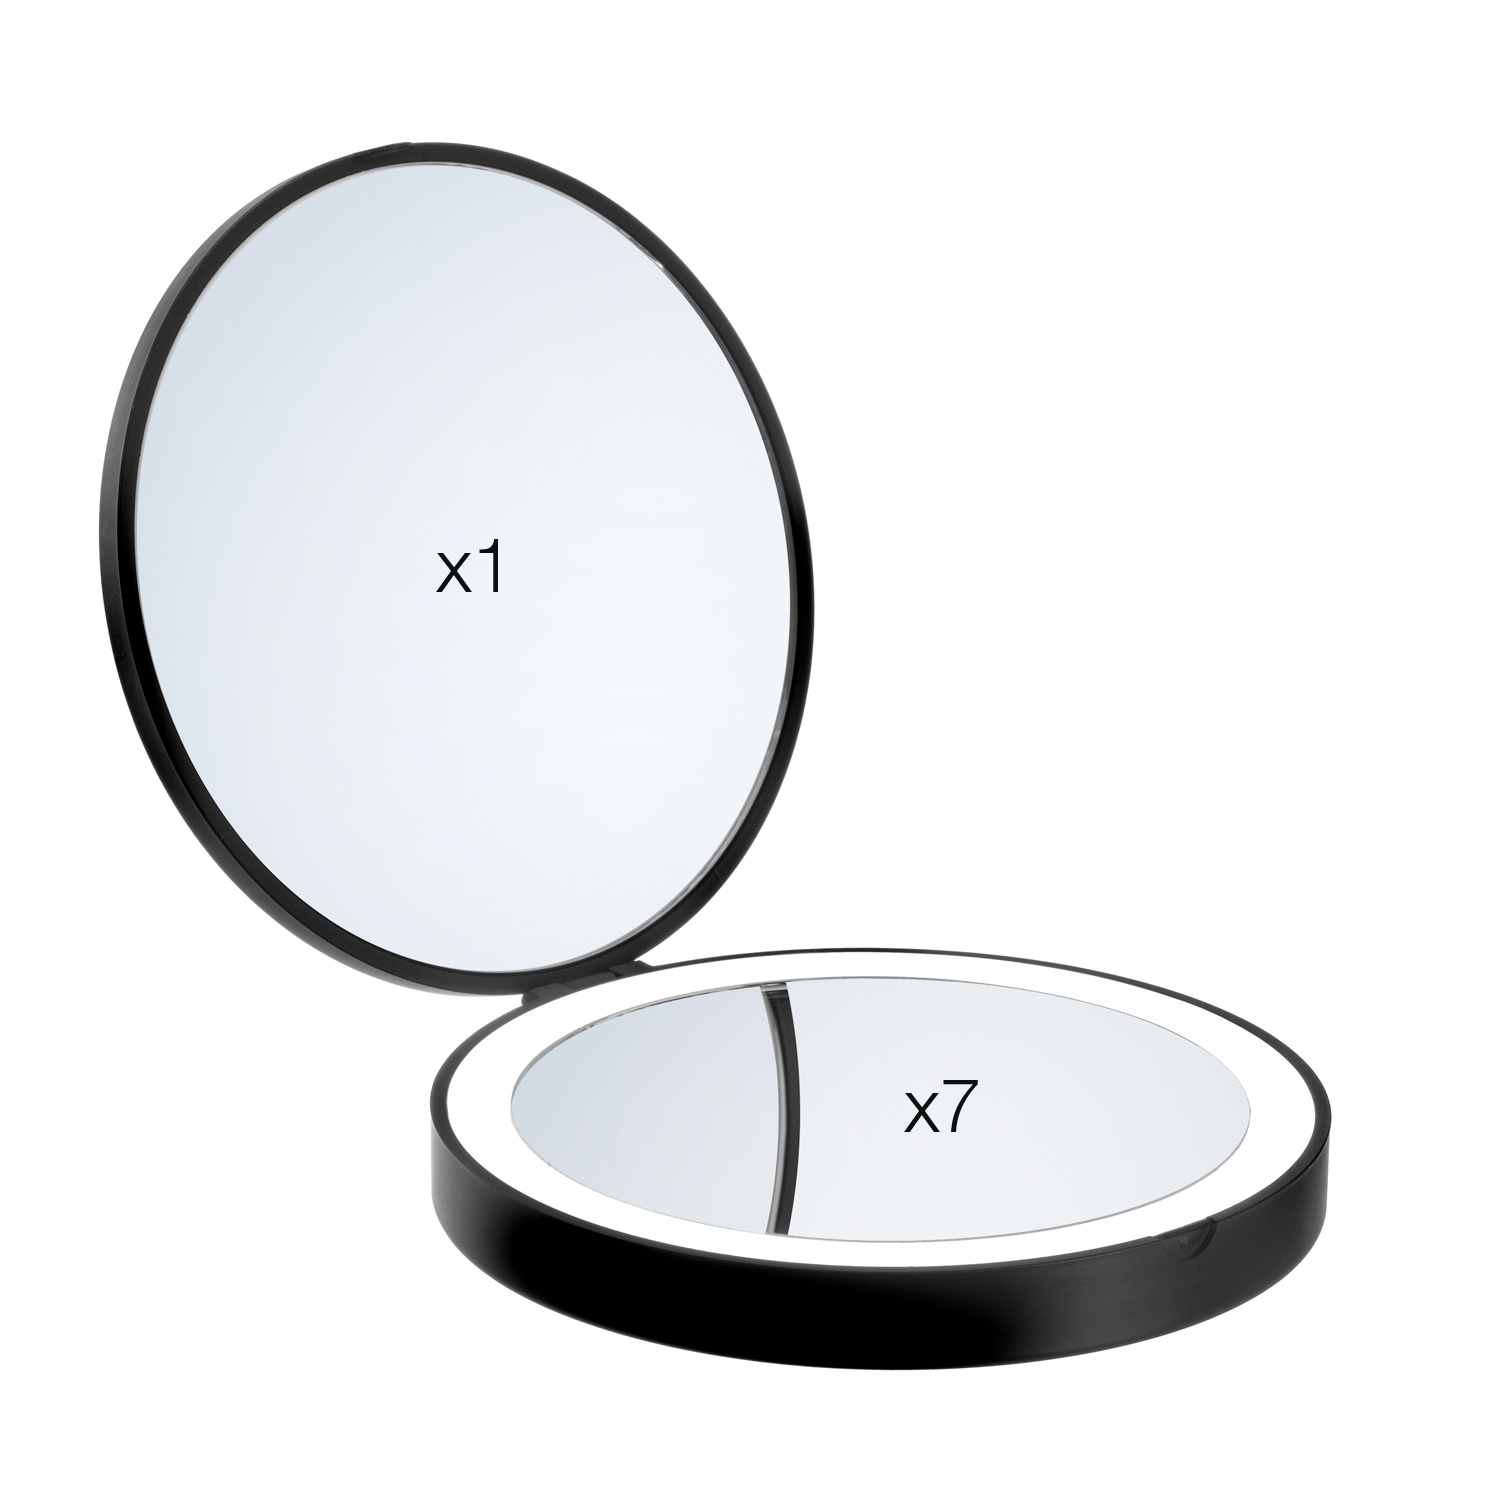 Smedbo Outline miroir de salle fk437 Chrome 3 positions Cosmétique Miroir Miroir stand